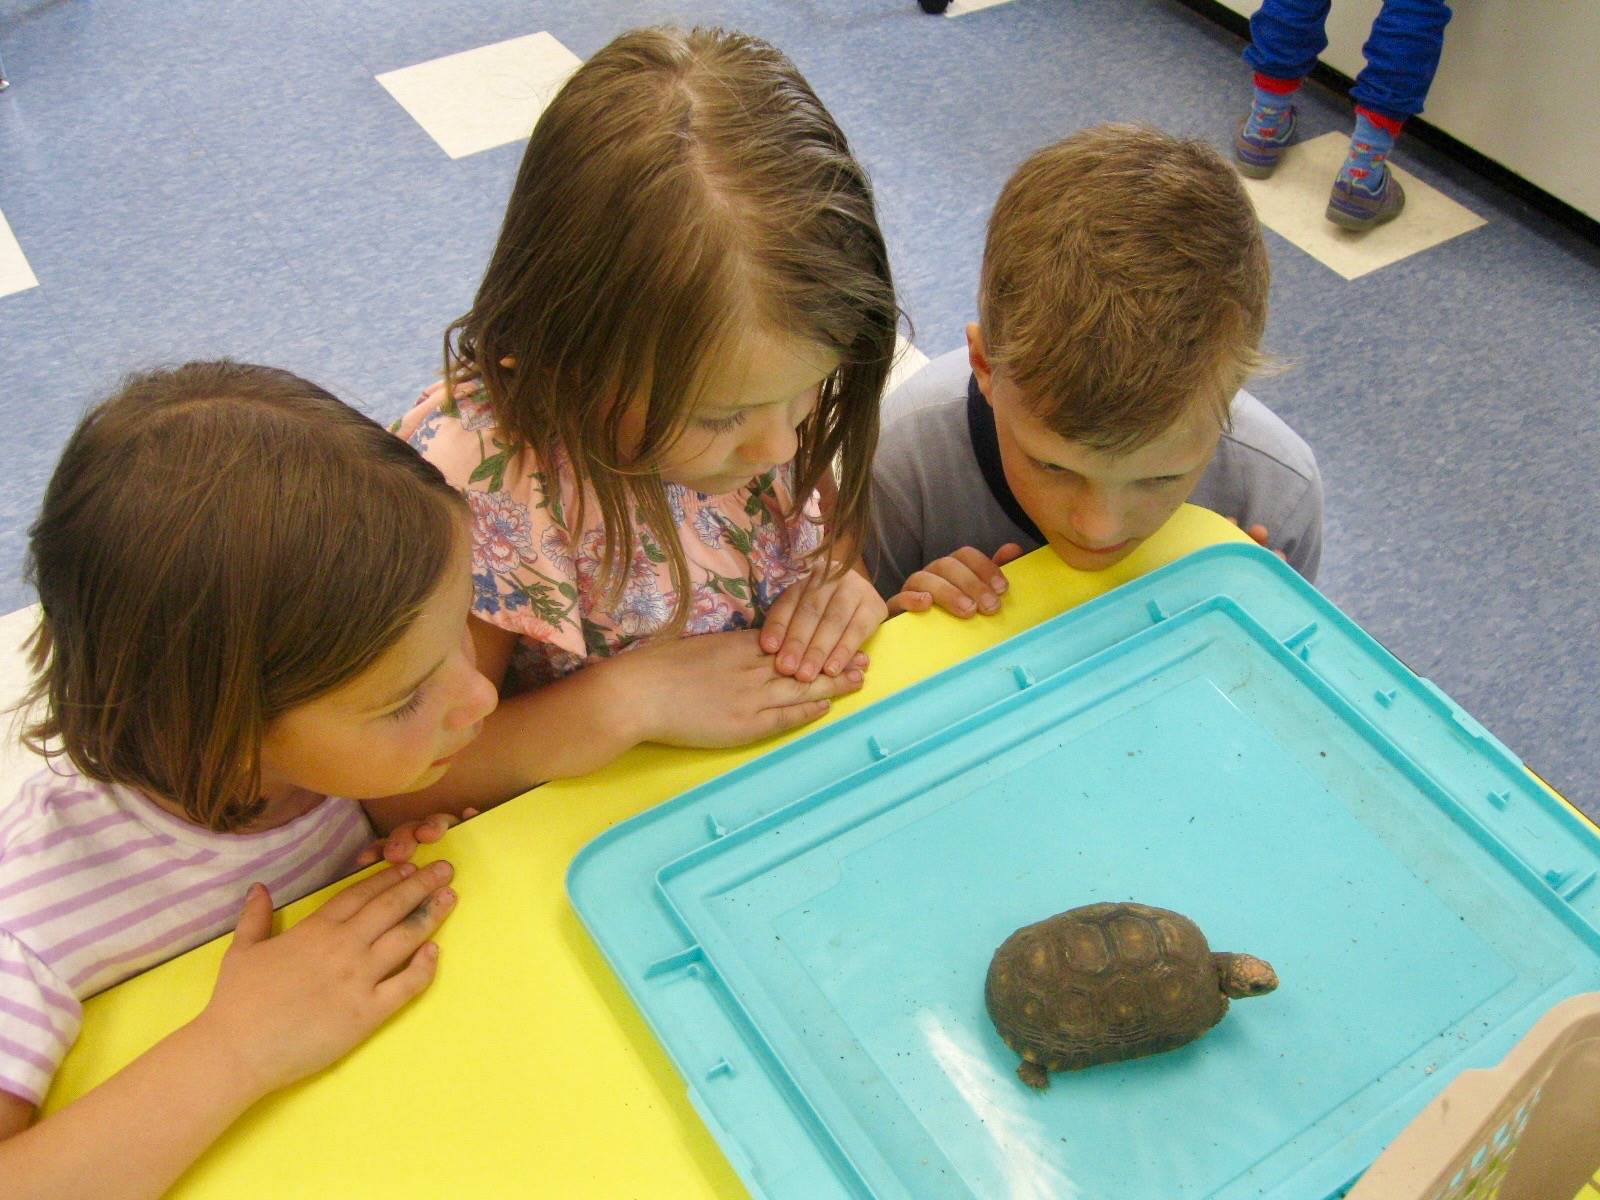 3 students observe baby tortoise.